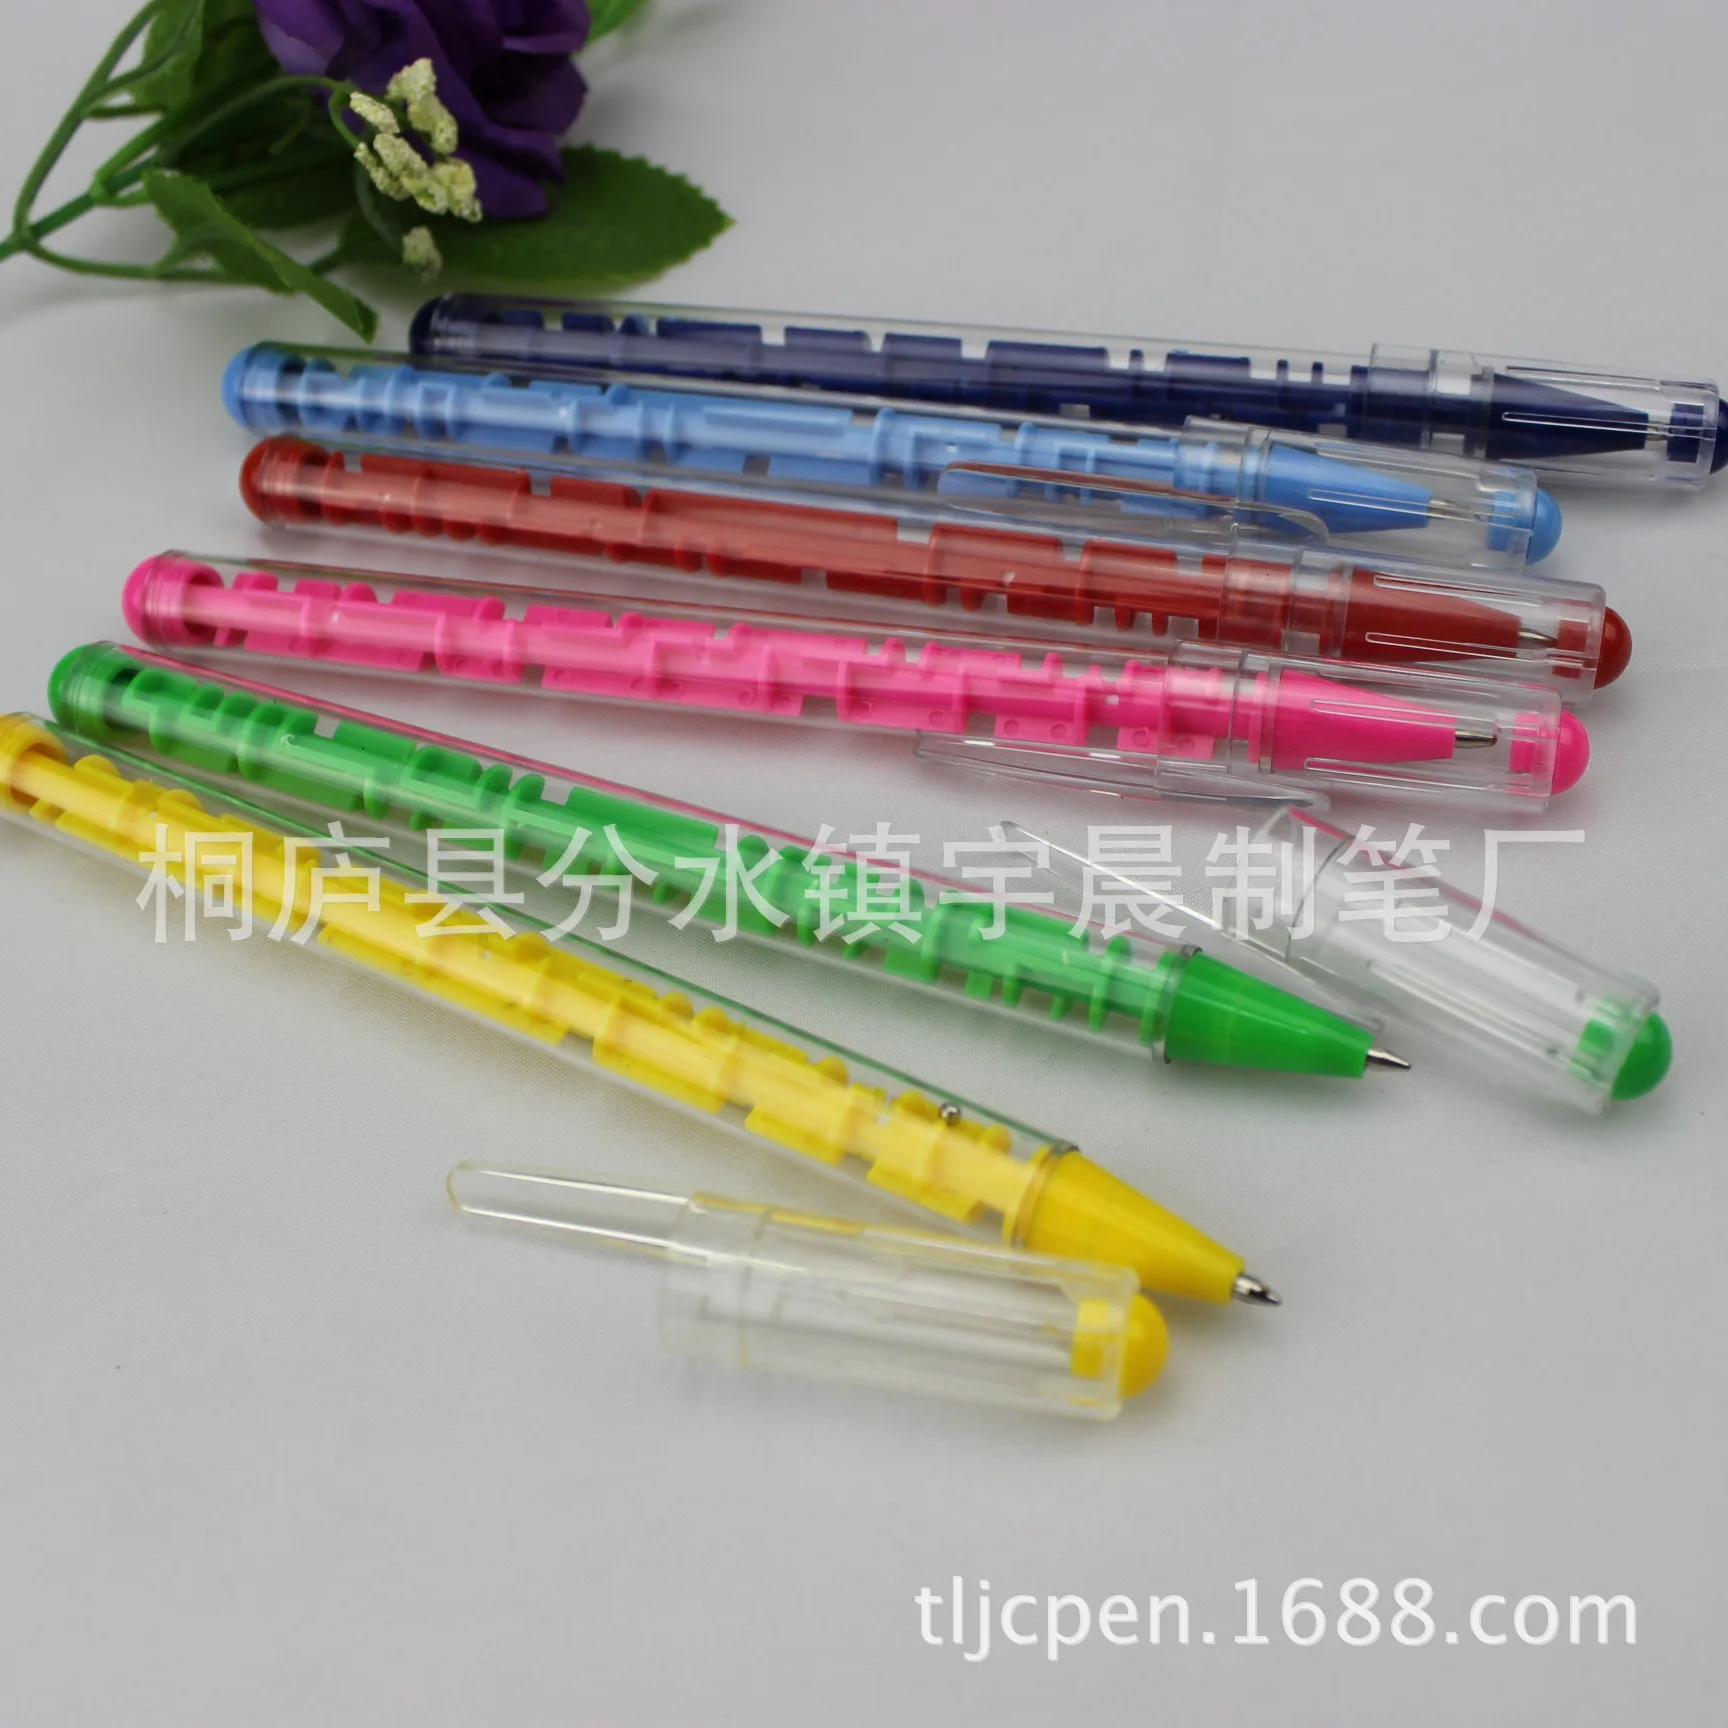 South Korea Creative Stationery Fun Educational mi gong bi Students Prizes Game Toy Pen Plastic Maze Ballpoint Pen